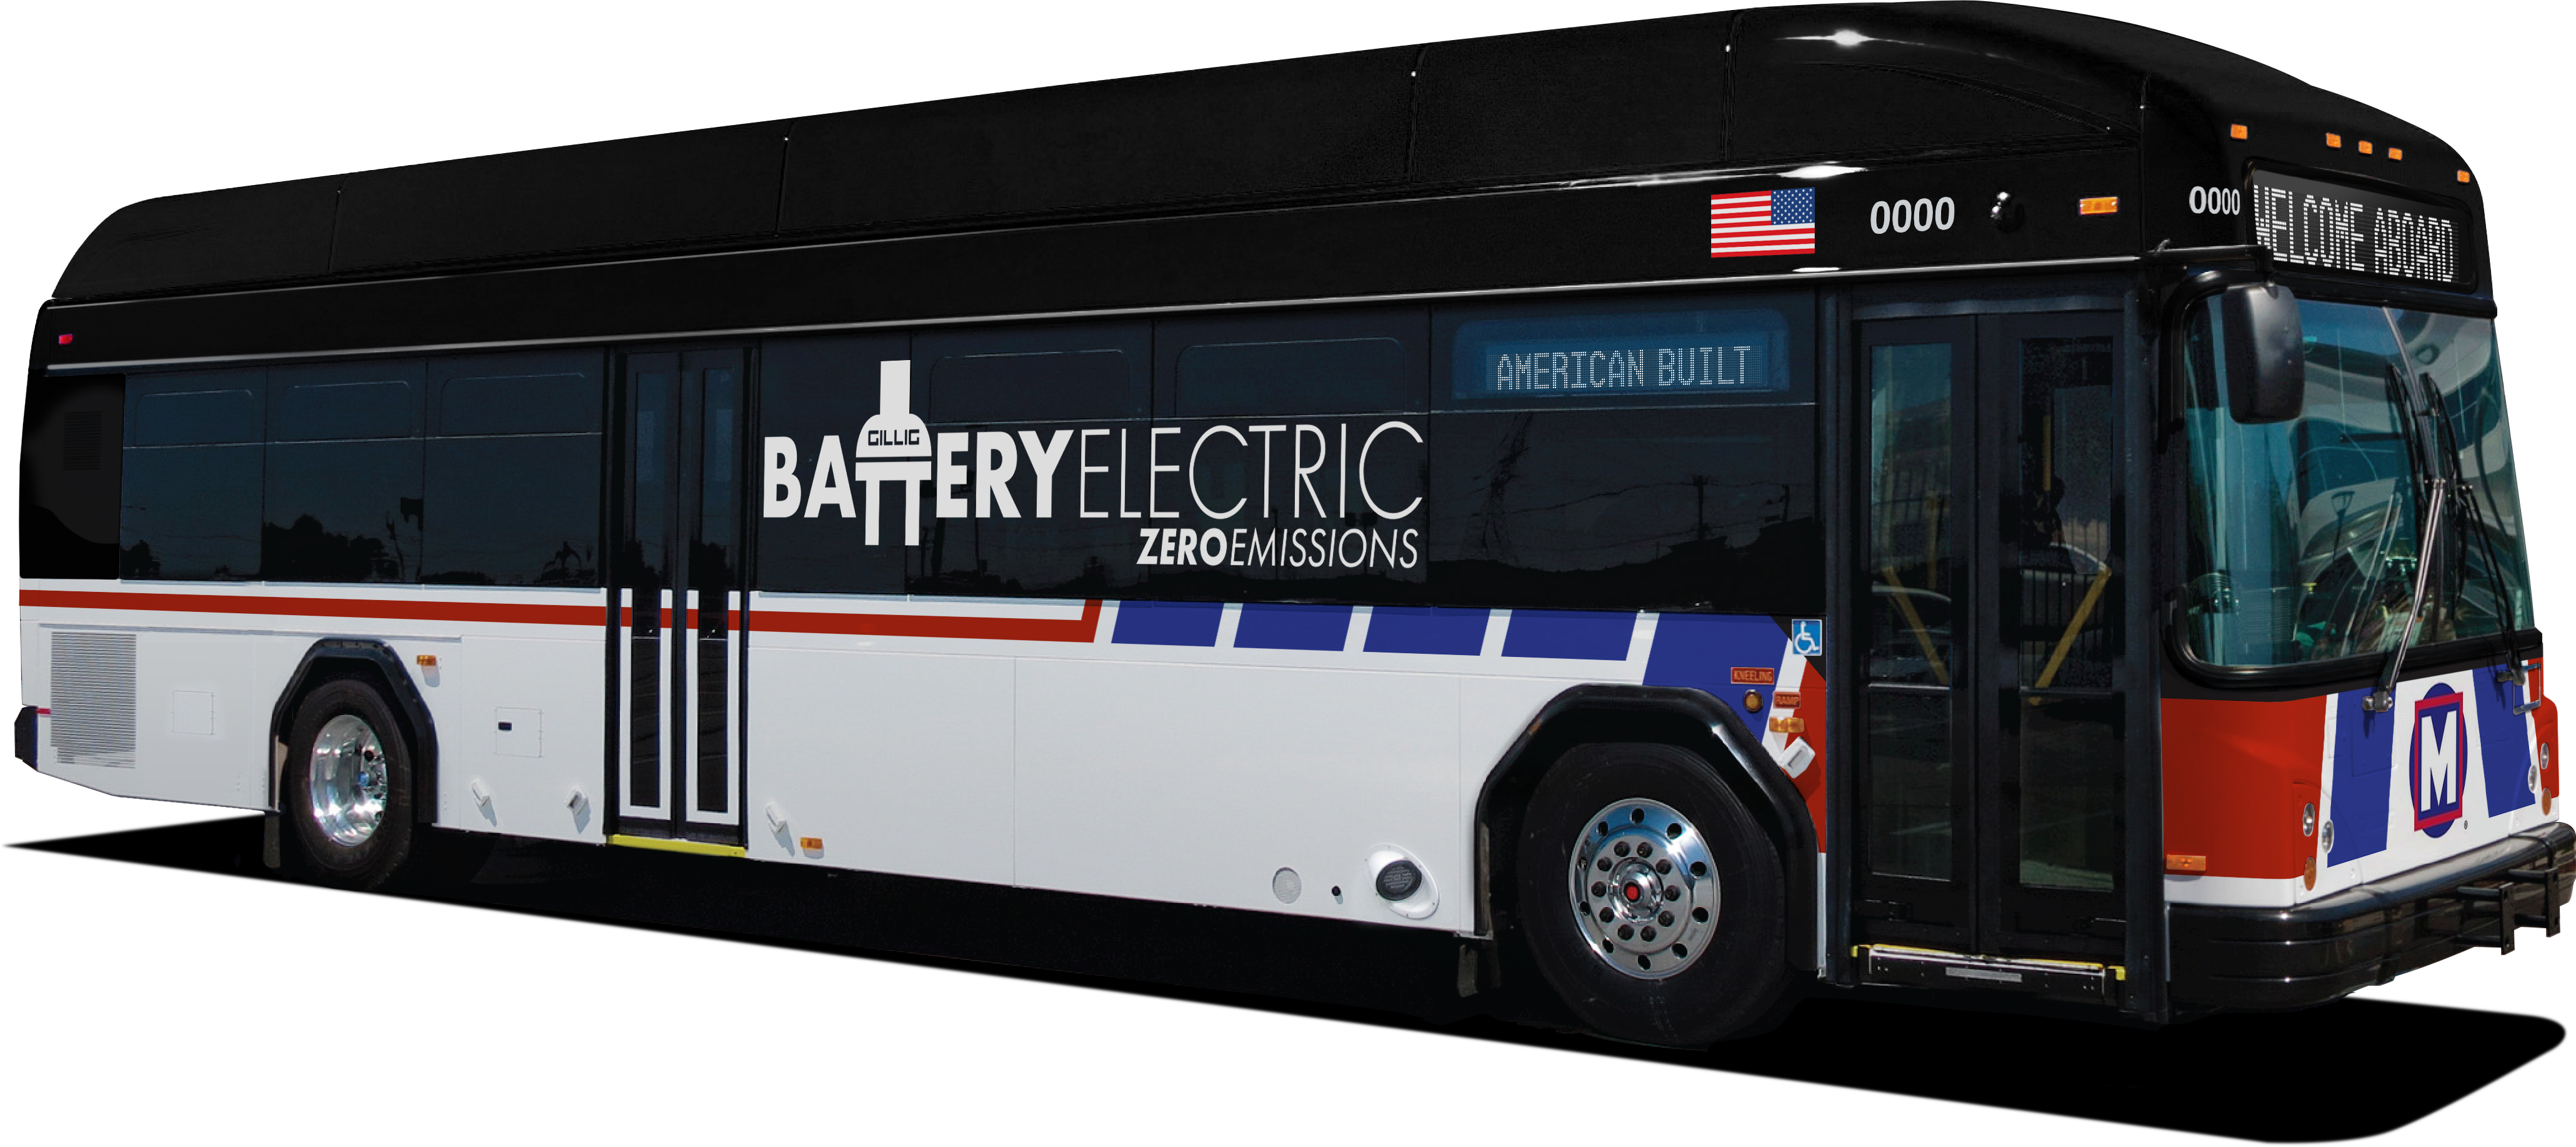 Metro Transit Lands 1 75 Million Grant To Add Electric Bus